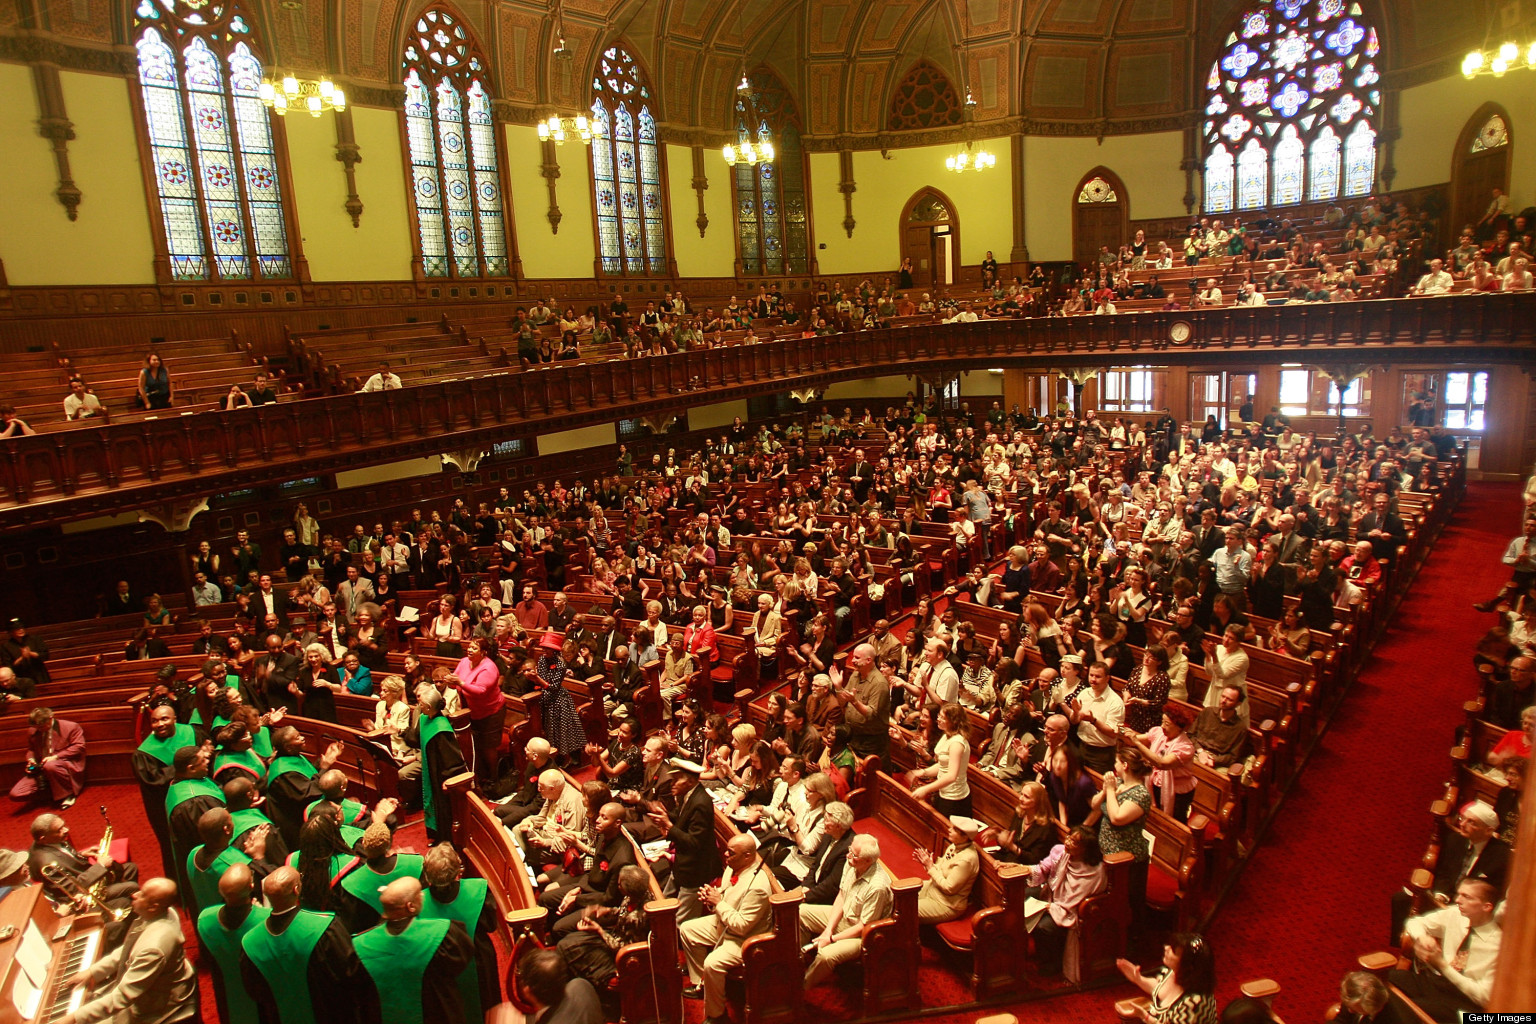 Racial Diversity Increasing In U.S. Congregations | HuffPost